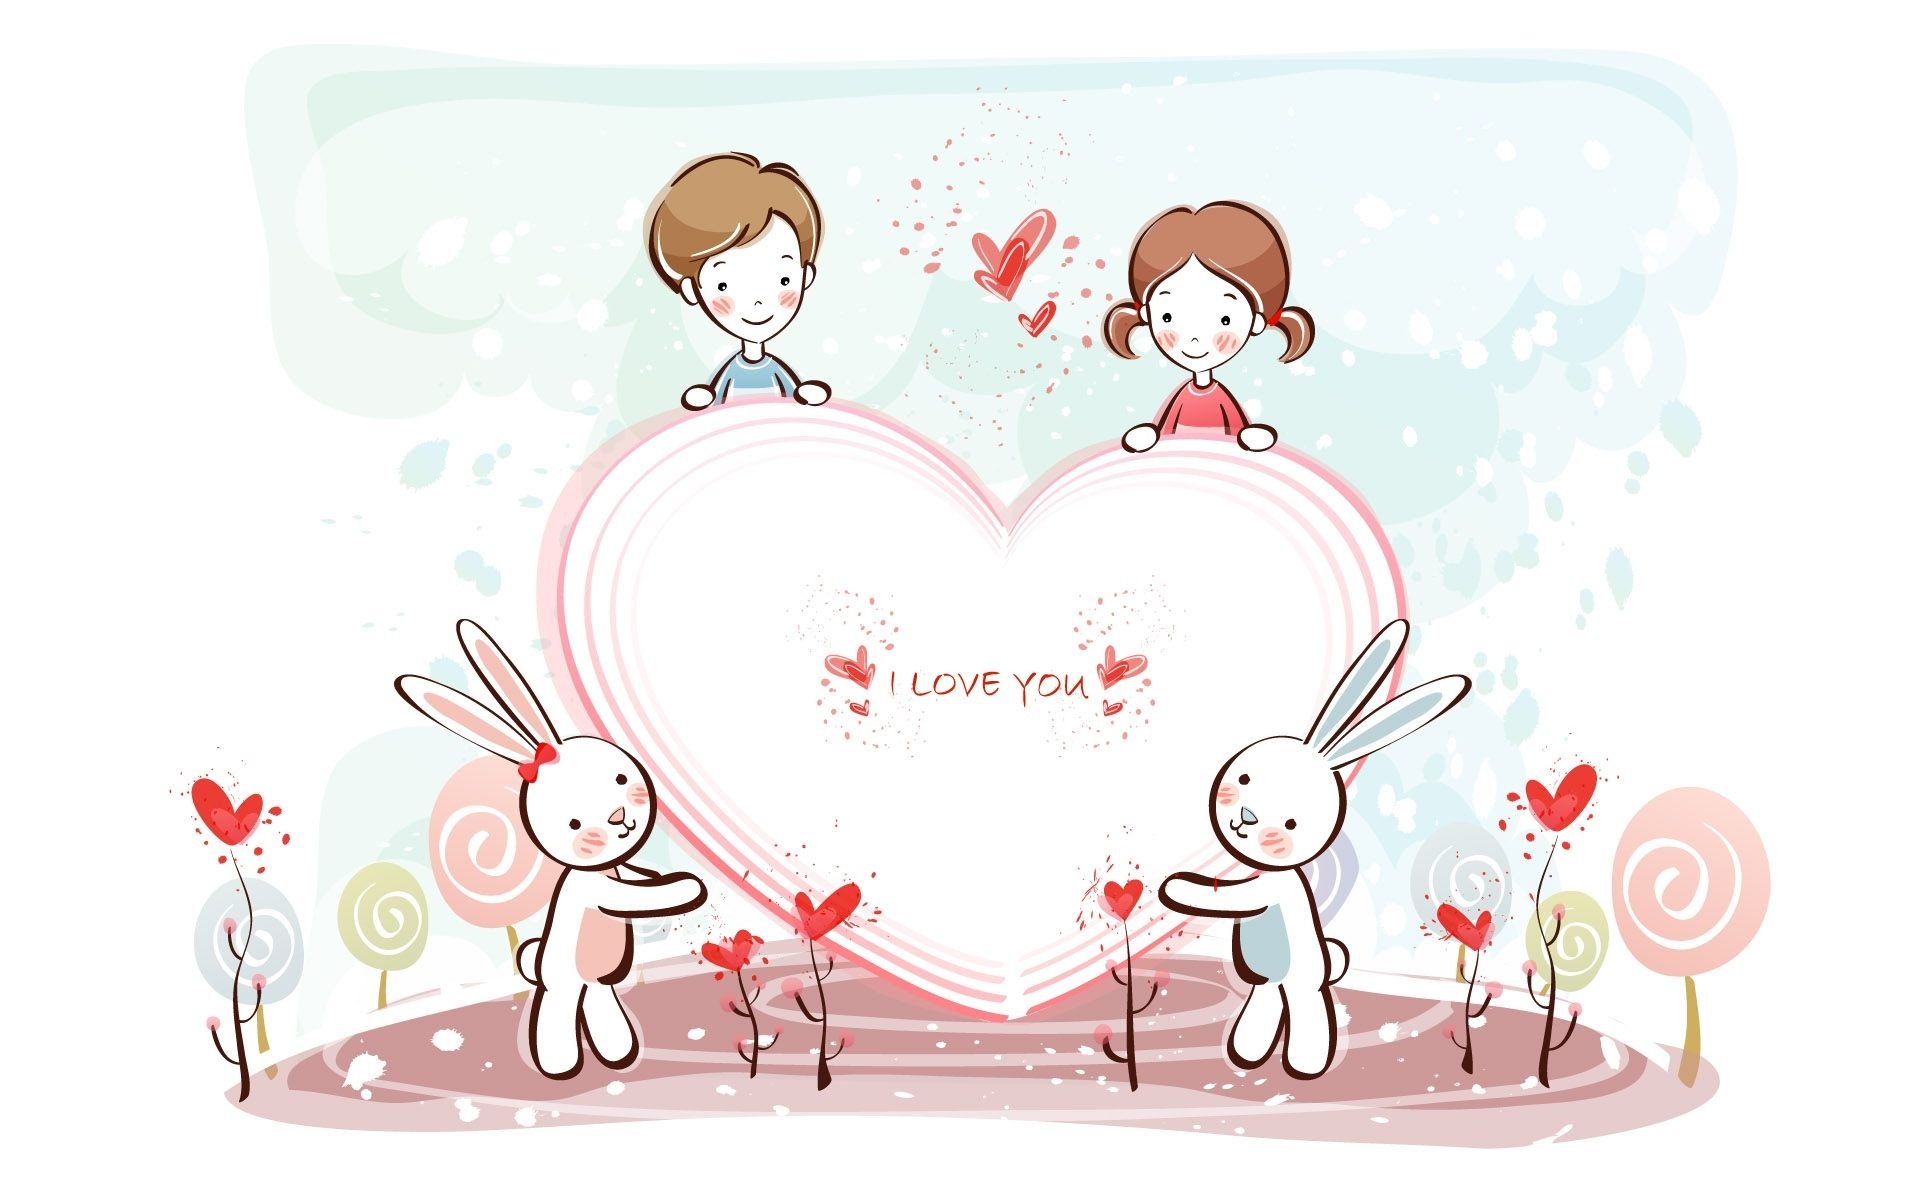 Valentines Day Illustration desktop wallpaper free download